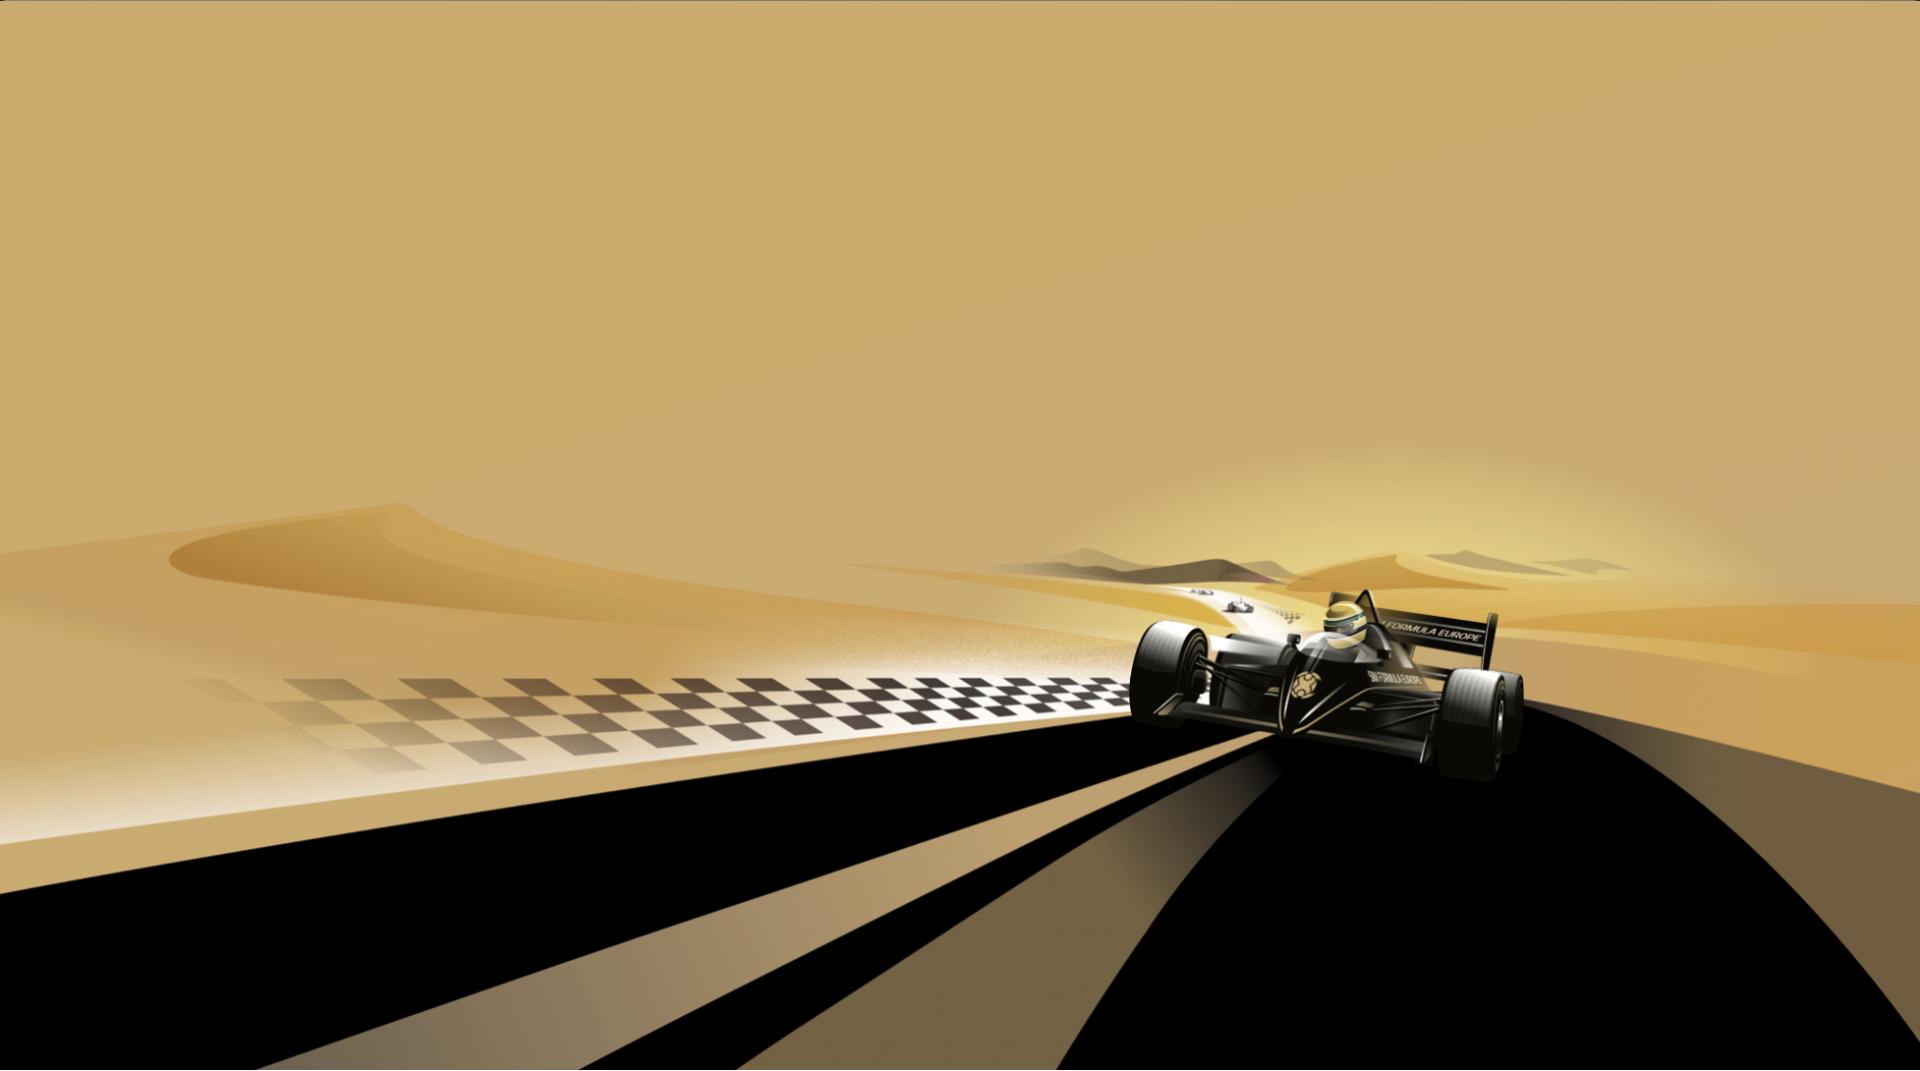 Racing Speed Simulator Codes Futuristic Developments